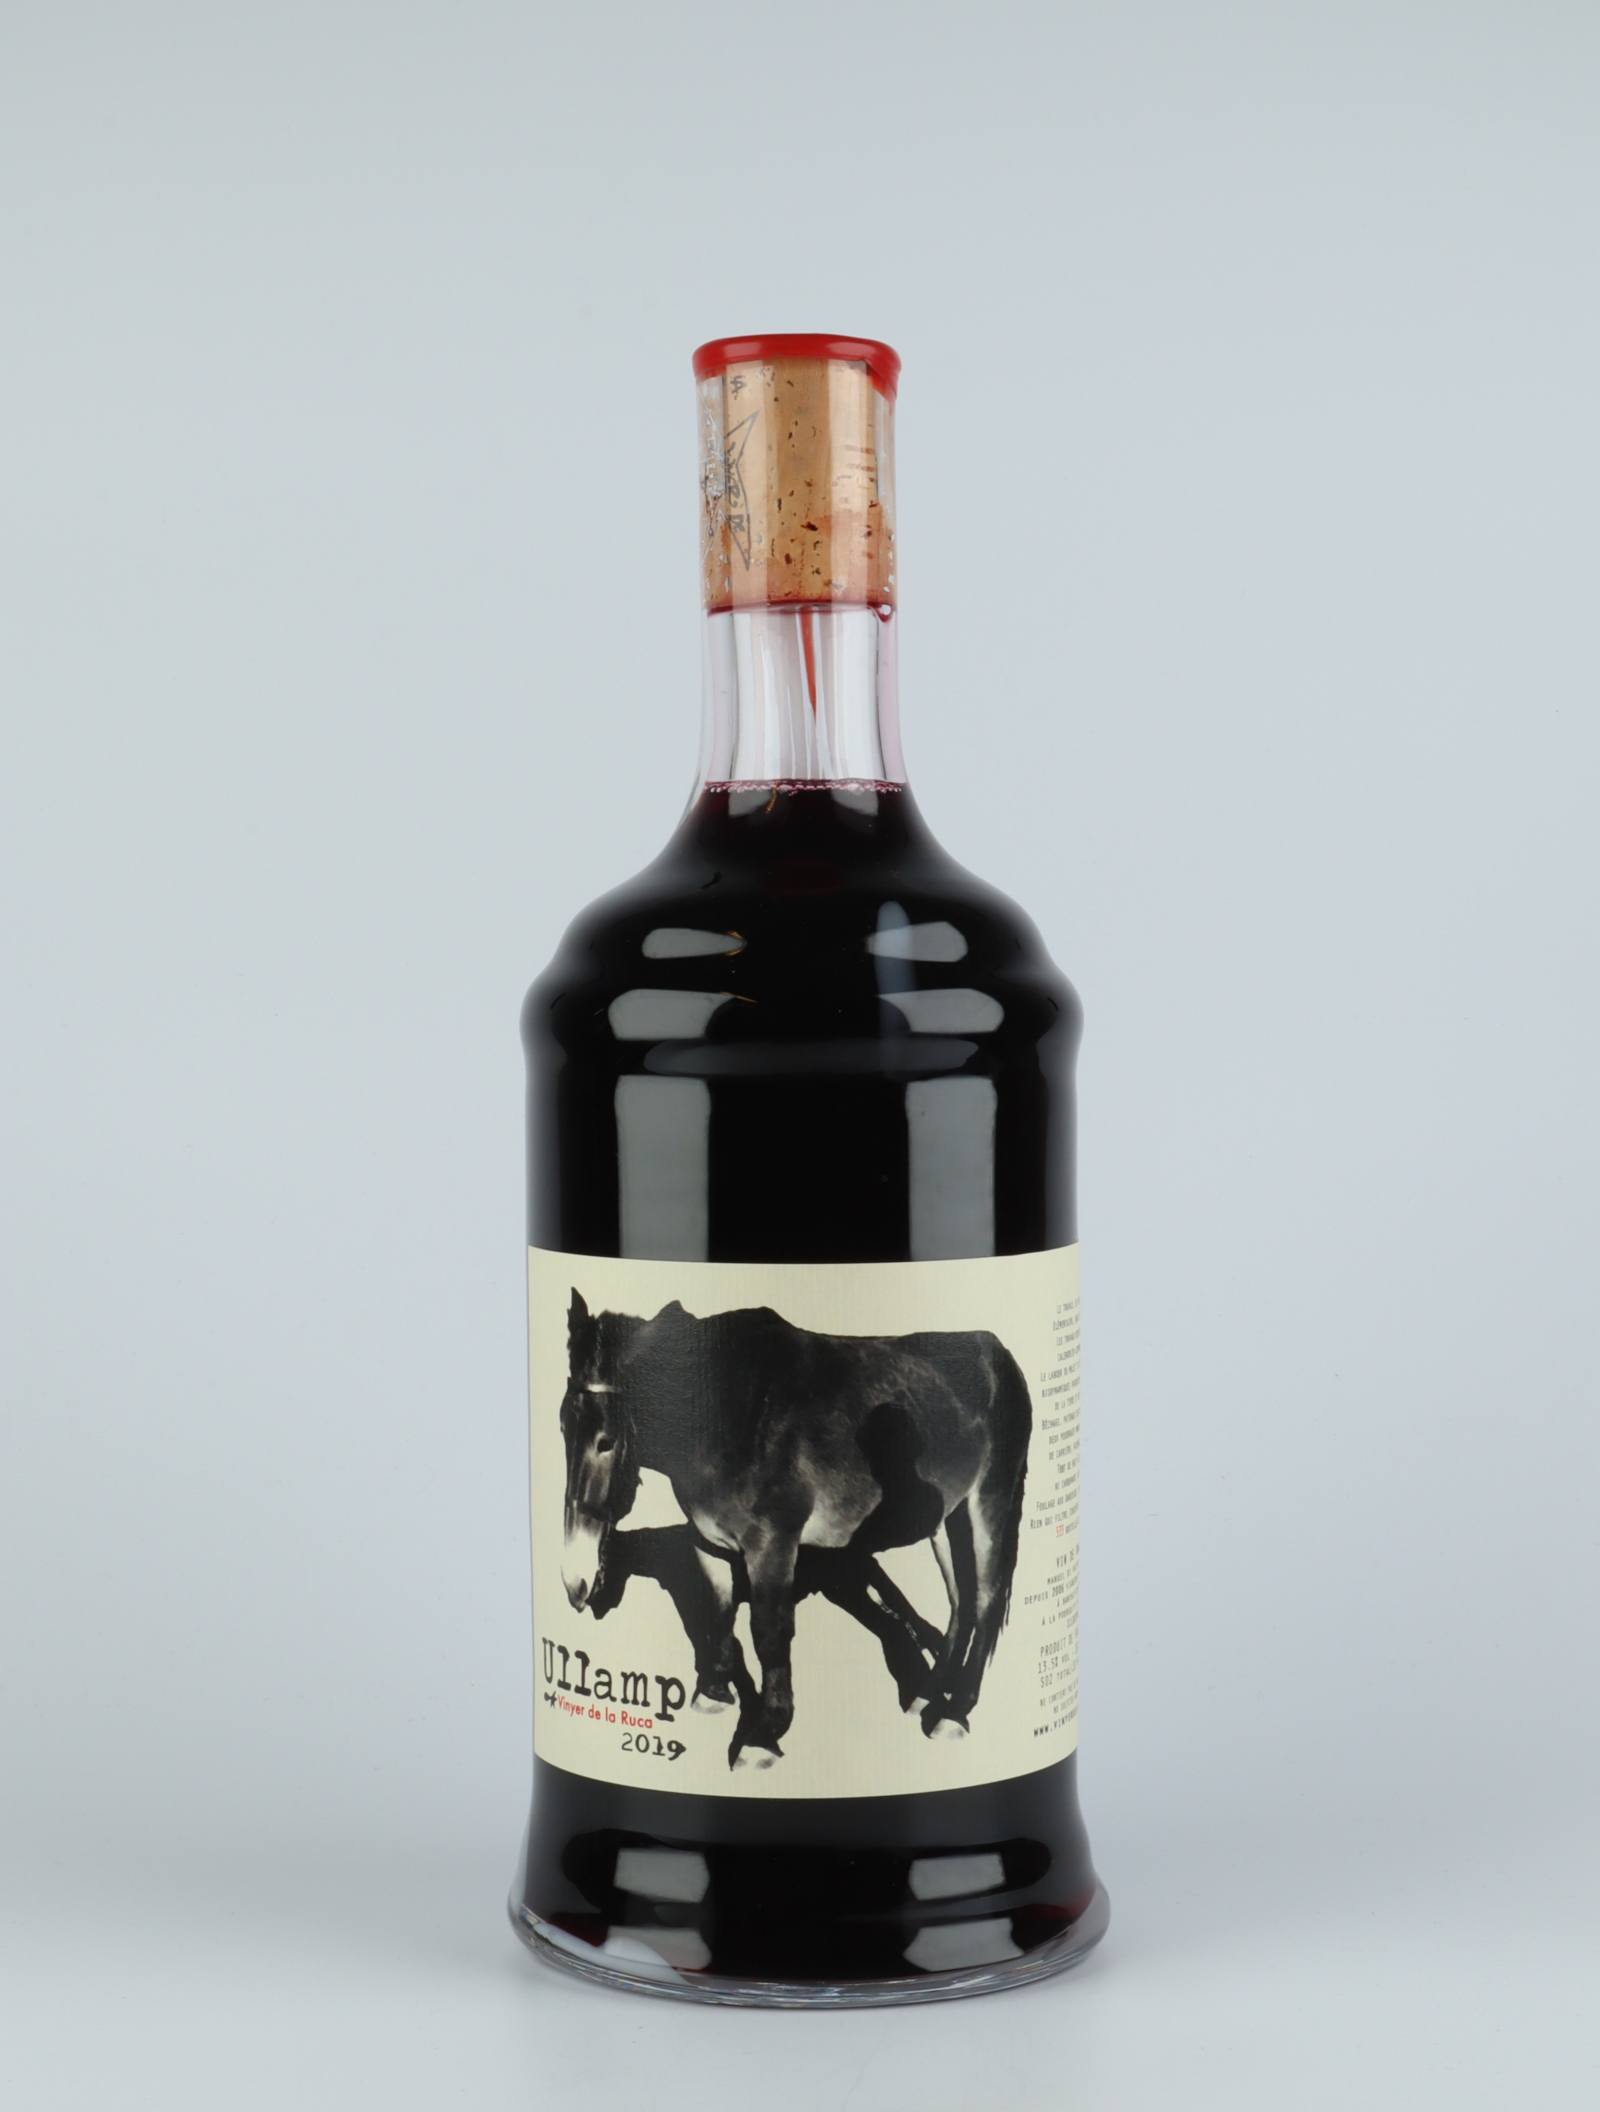 A bottle 2019 Ullamp Red wine from Vinyer de la Ruca, Rousillon in France